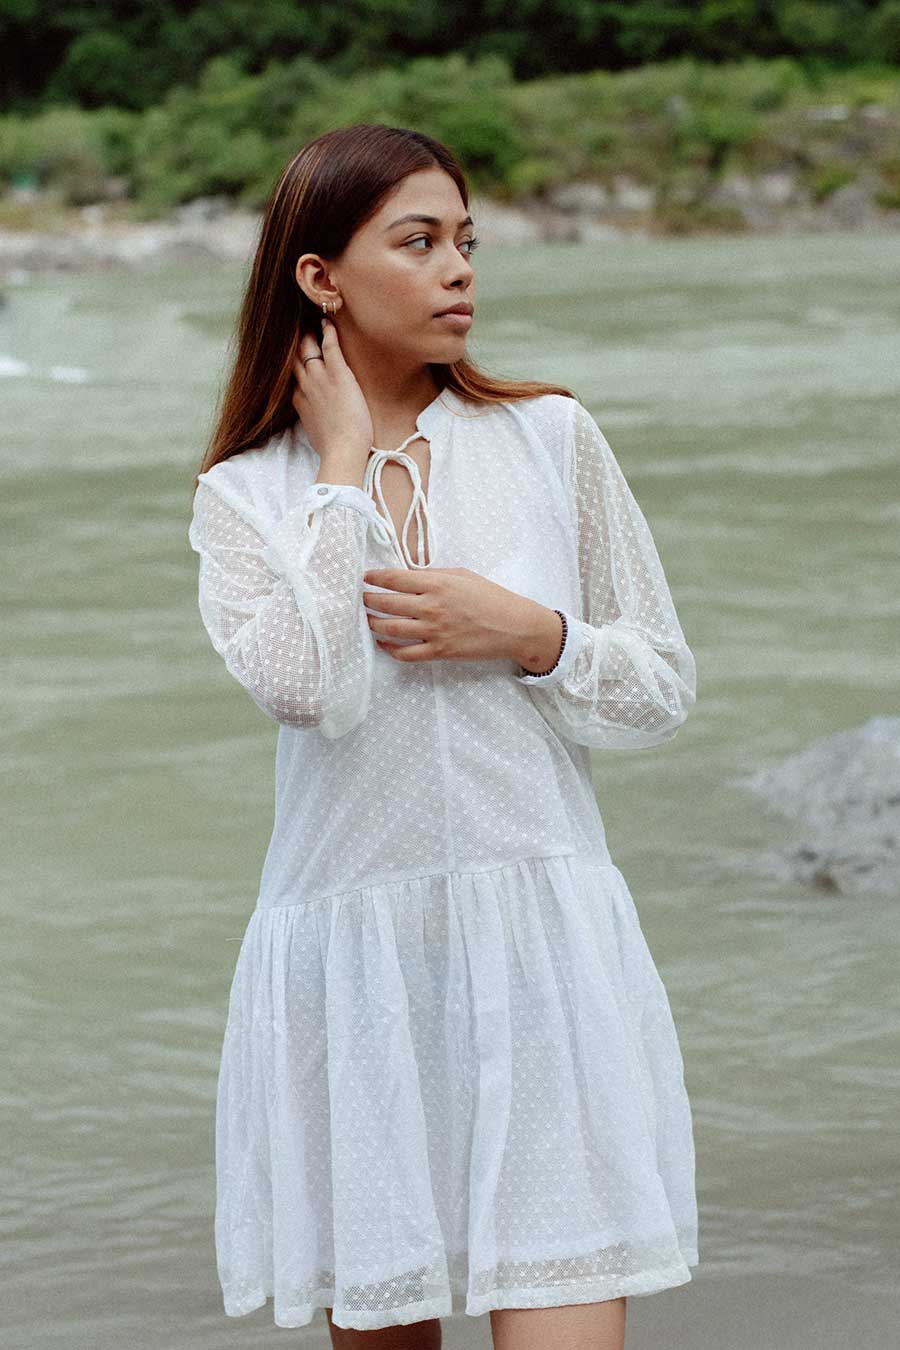 MO'OREA - White Dotted Lace Short Dress